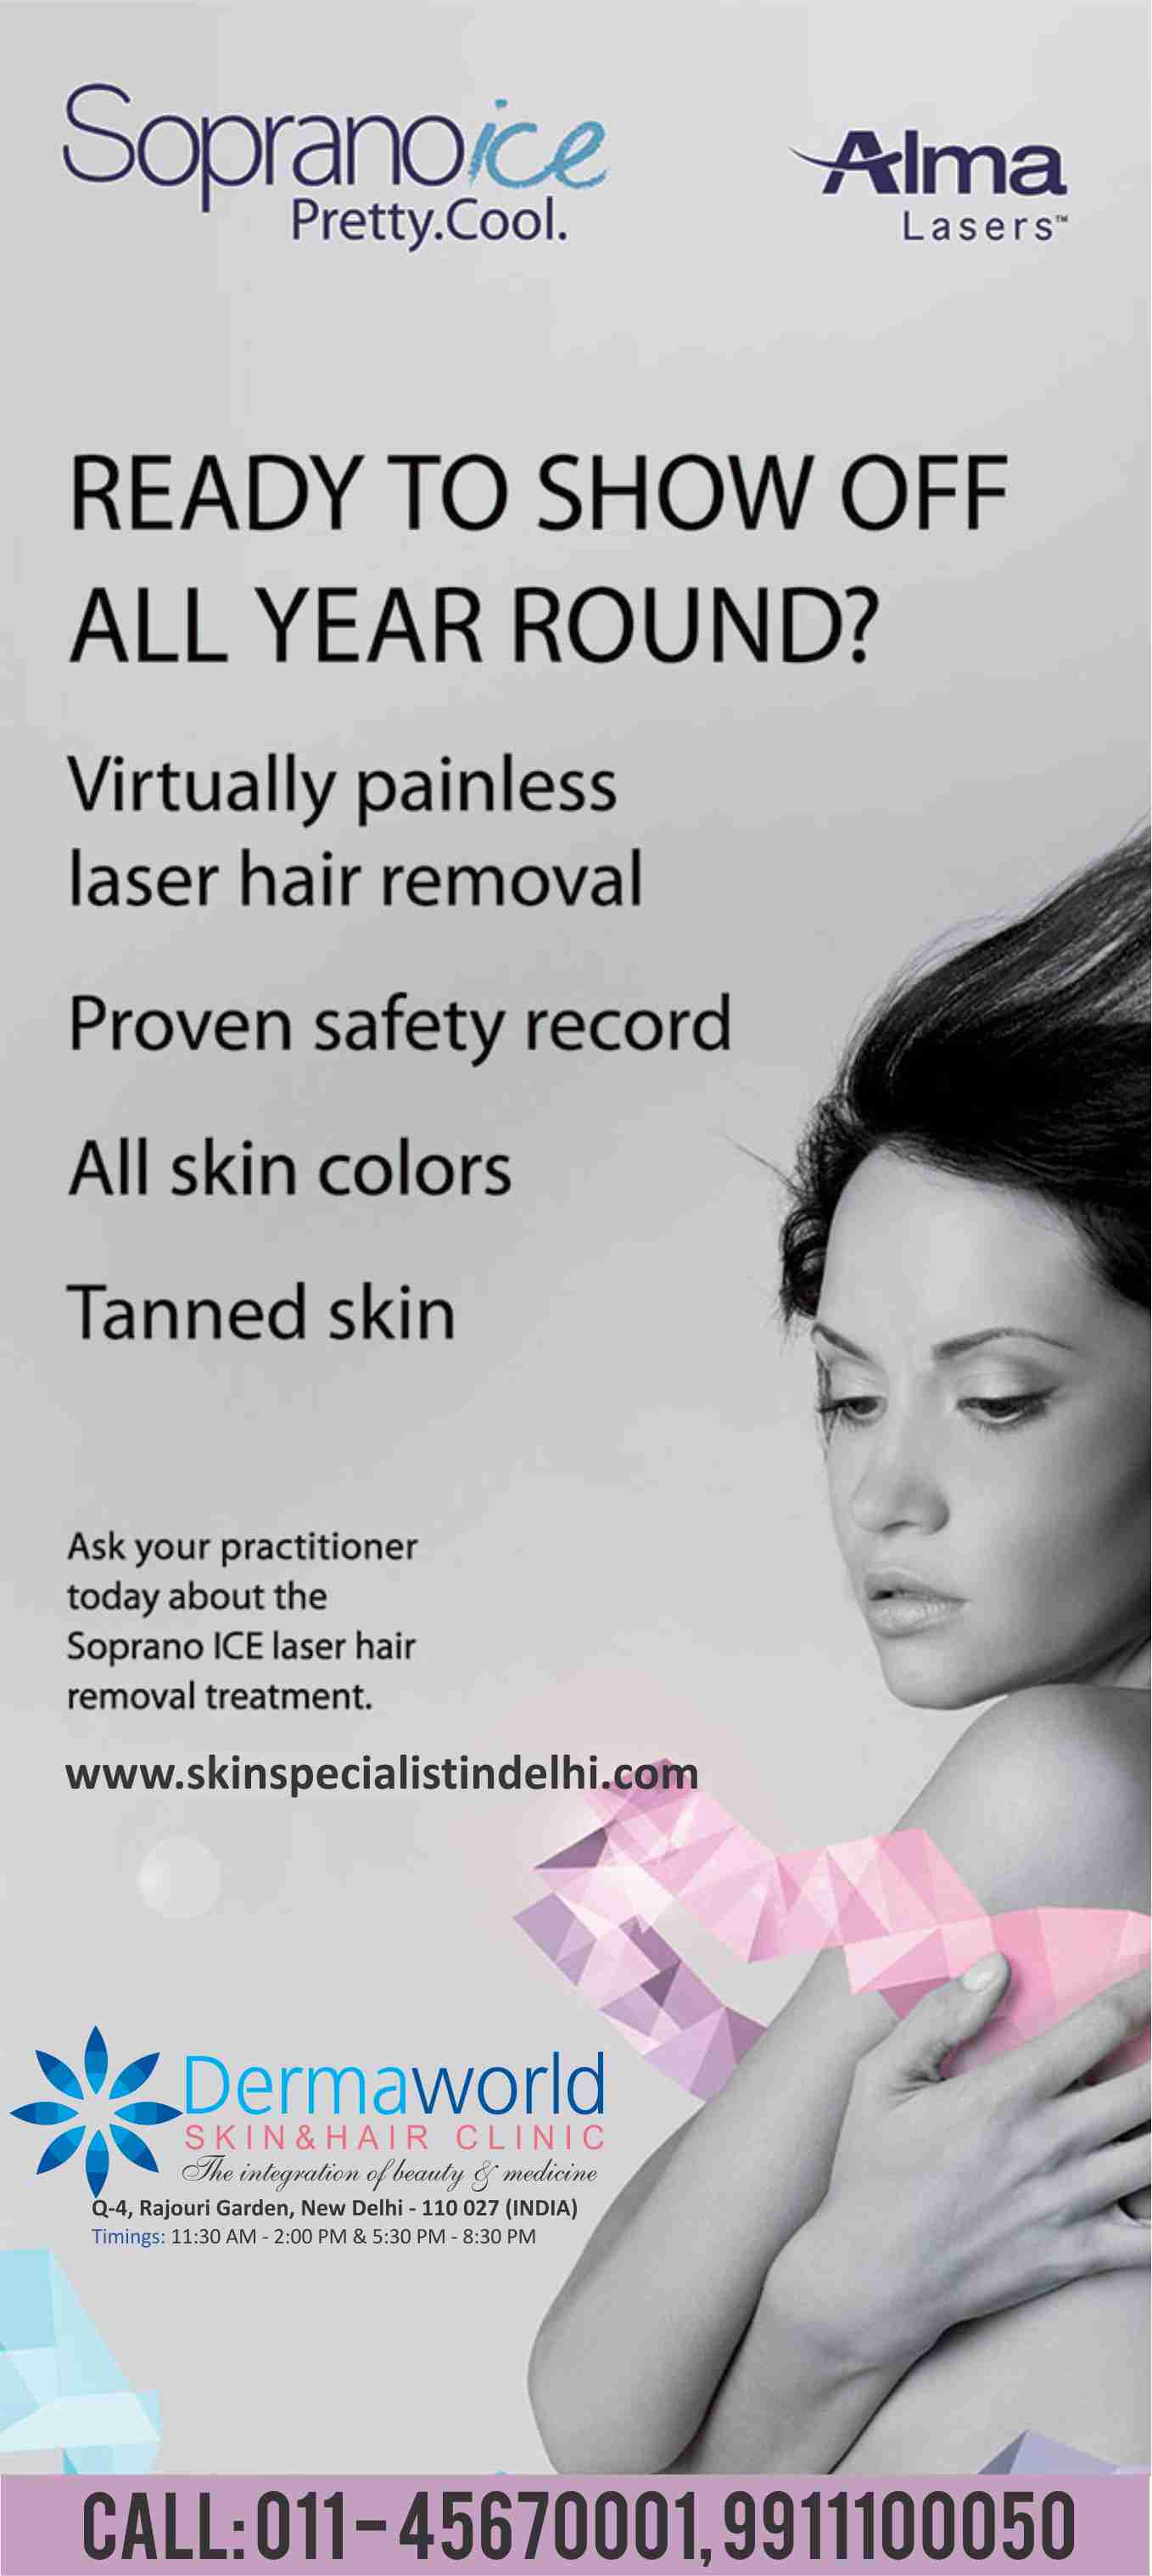 Best laser hair removal Clinic in Delhi « DERMAWORLD SKIN CLINIC